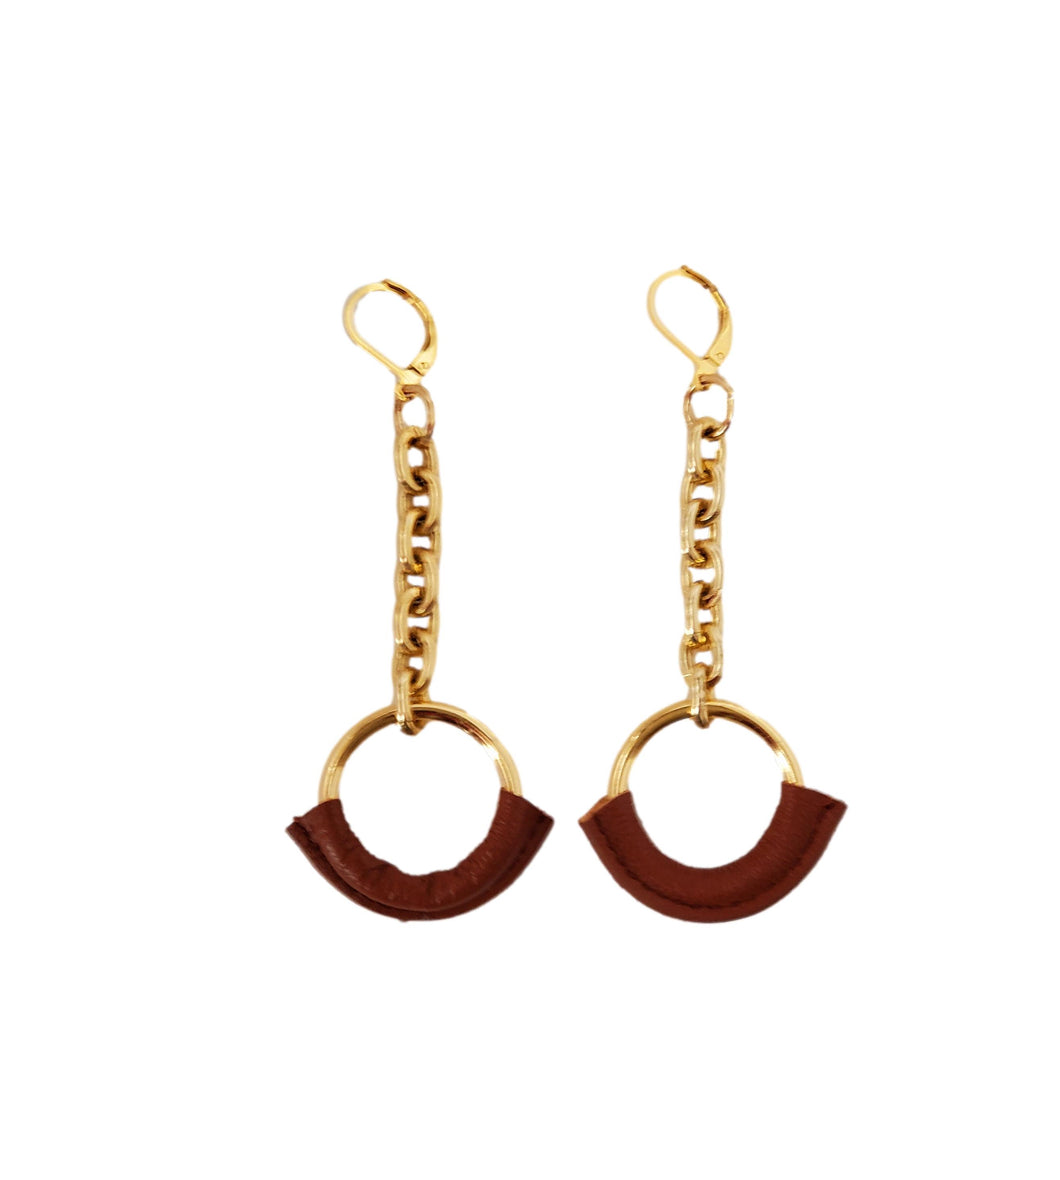 Women's Eternity Circle & Chain Hoop Earrings Wrapped in Brown Leather